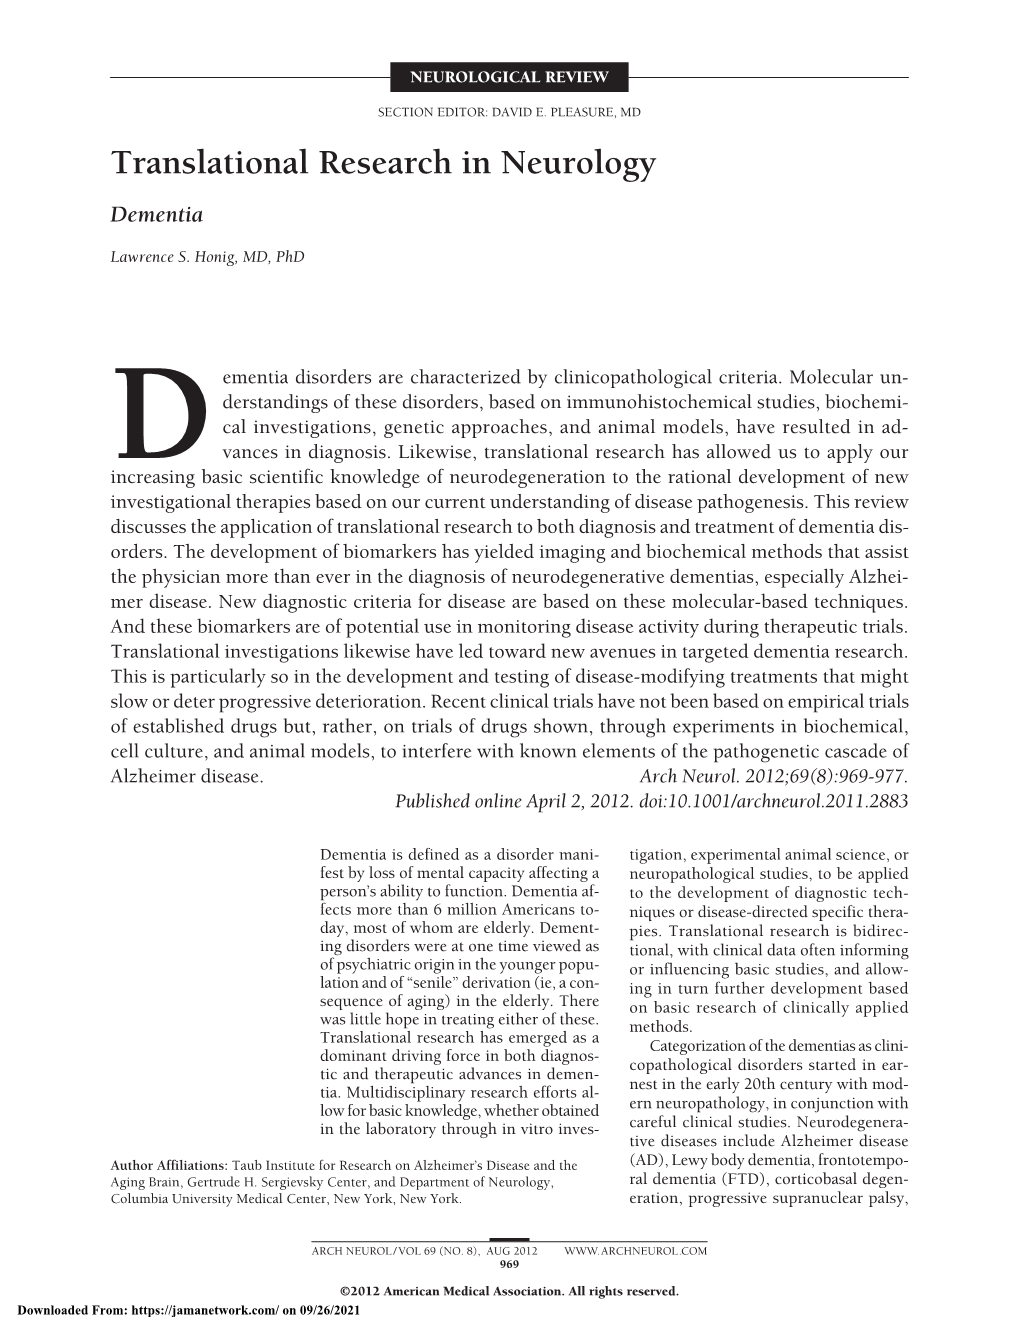 Translational Research in Neurology: Dementia